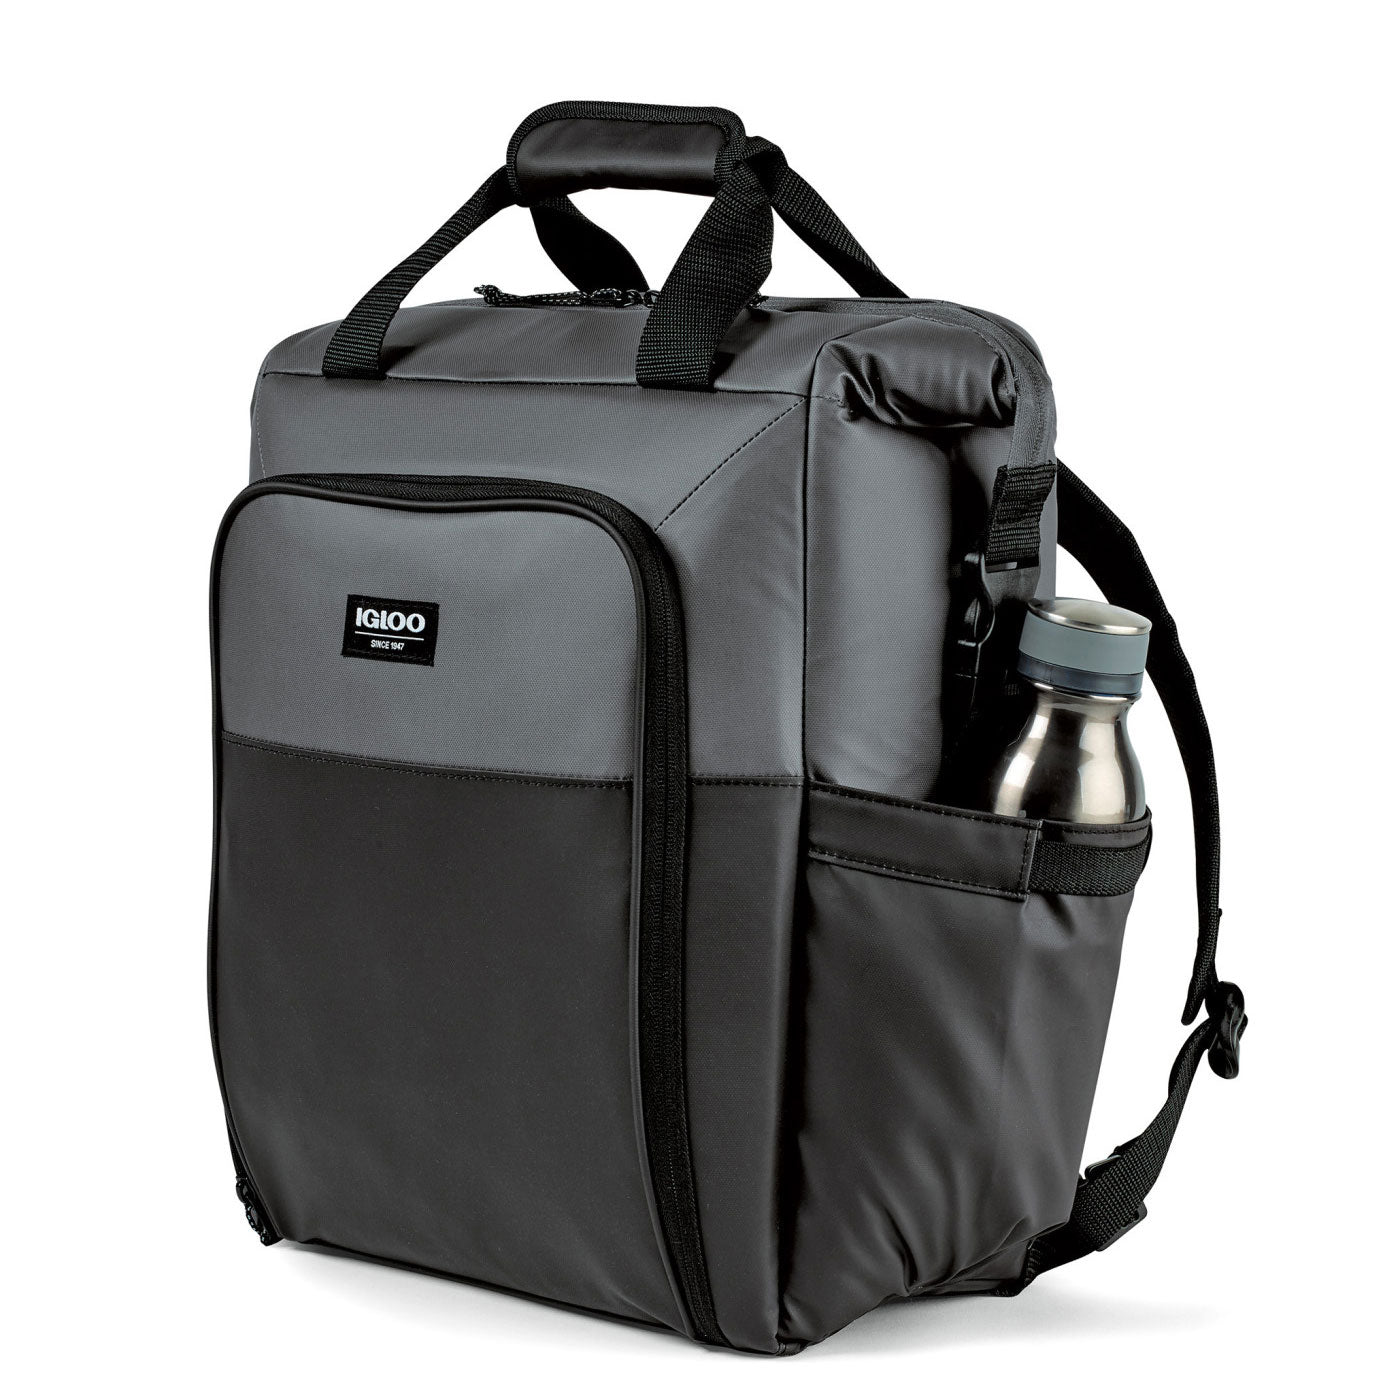 Igloo Seadrift Switch Customized Backpack Coolers, BlackGrey